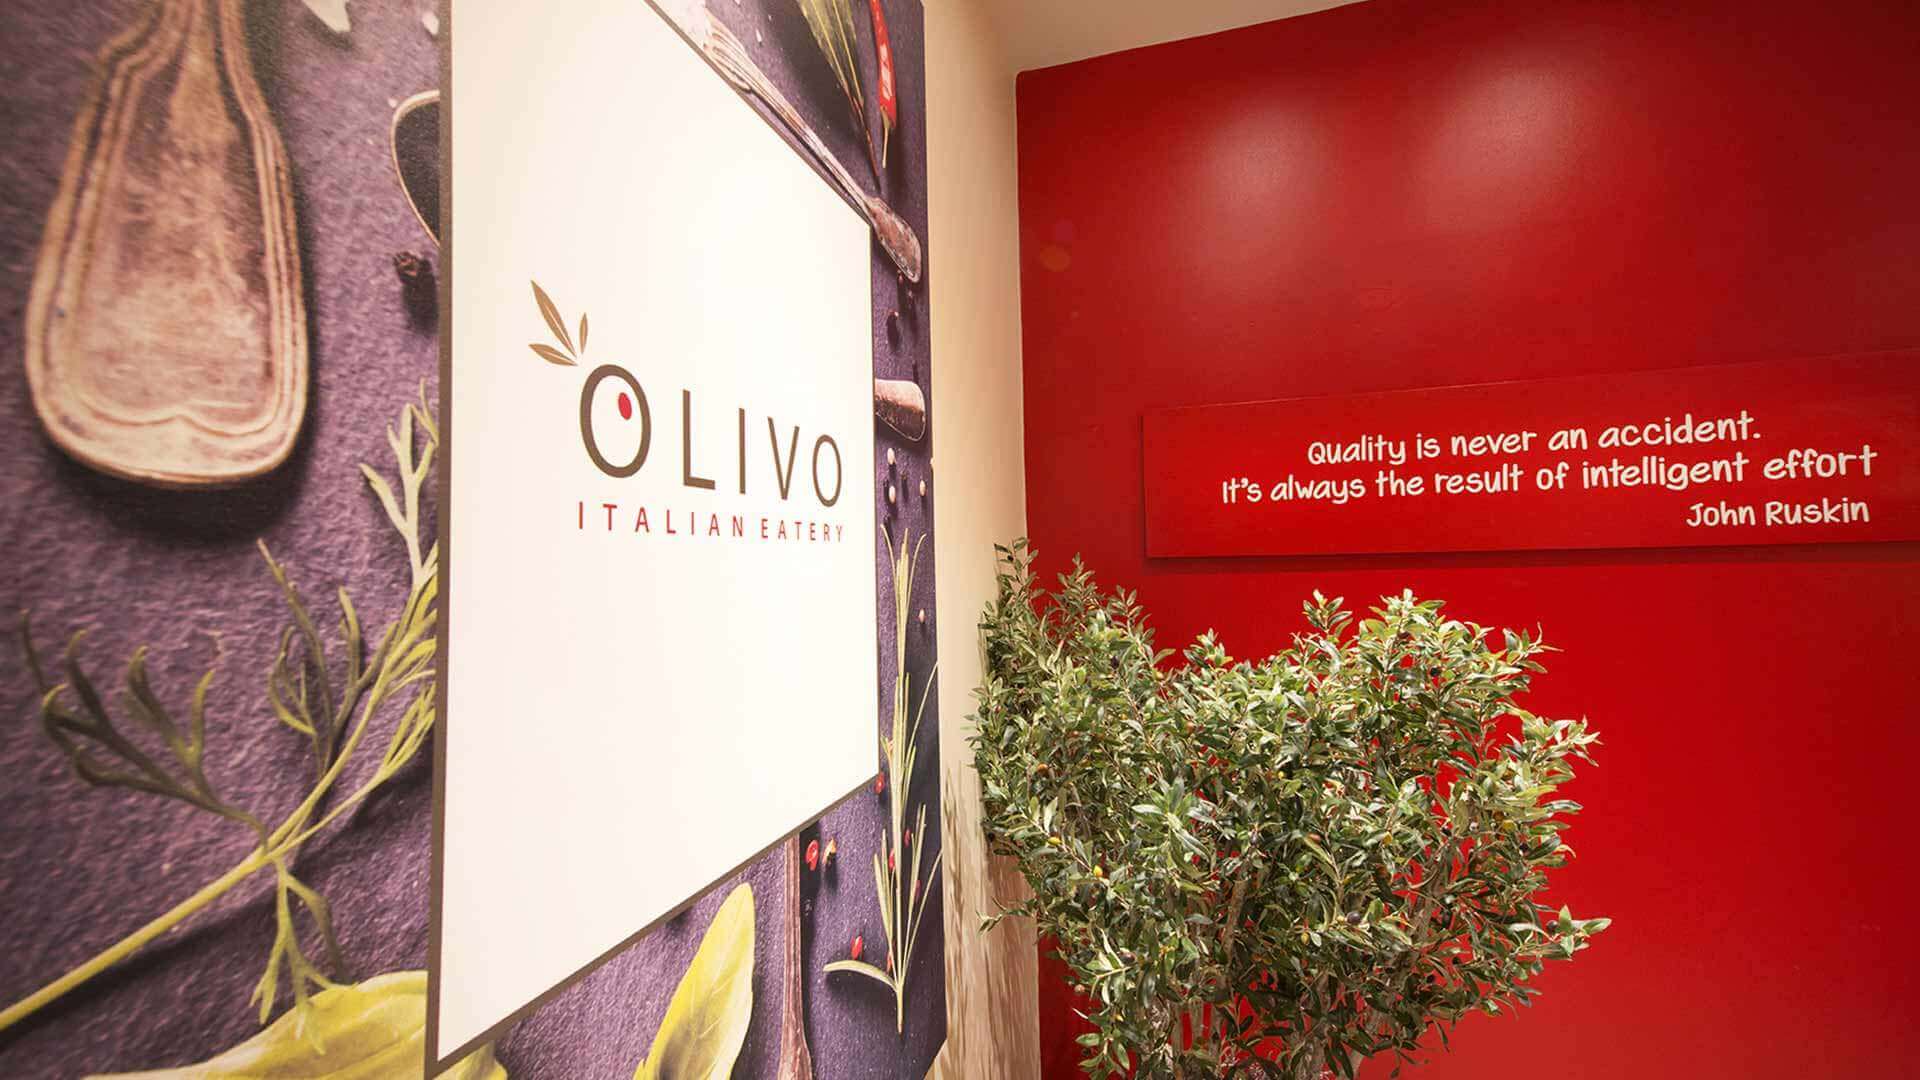 Sign and wall decor at the Olivo Italian restaurant near Cork airport